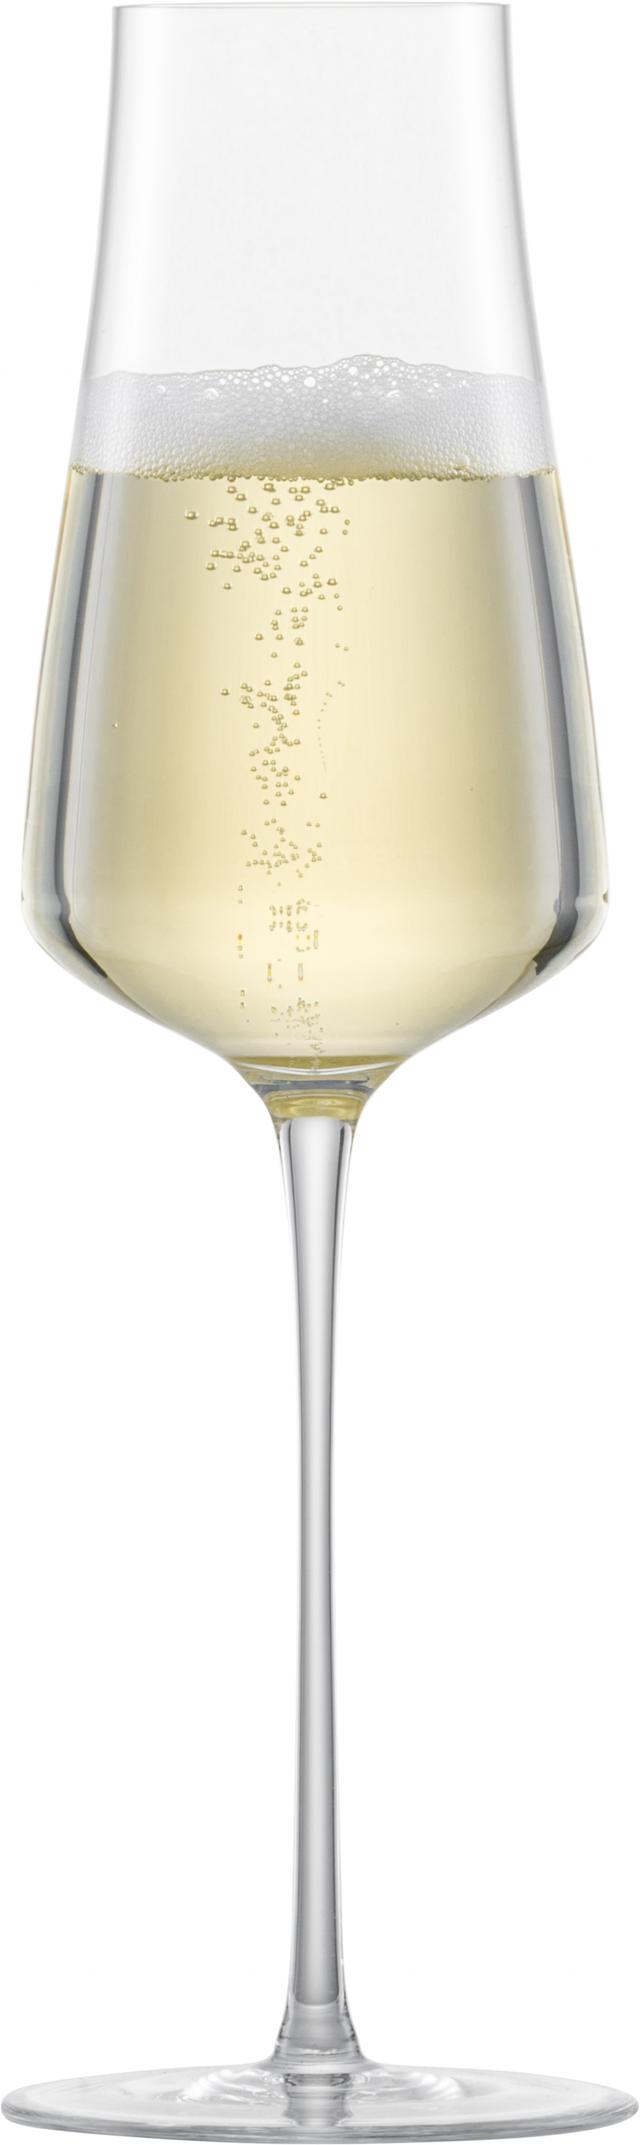 zwiesel glas wine classics select mousserende wijnglas met mp 7 - 0.272ltr